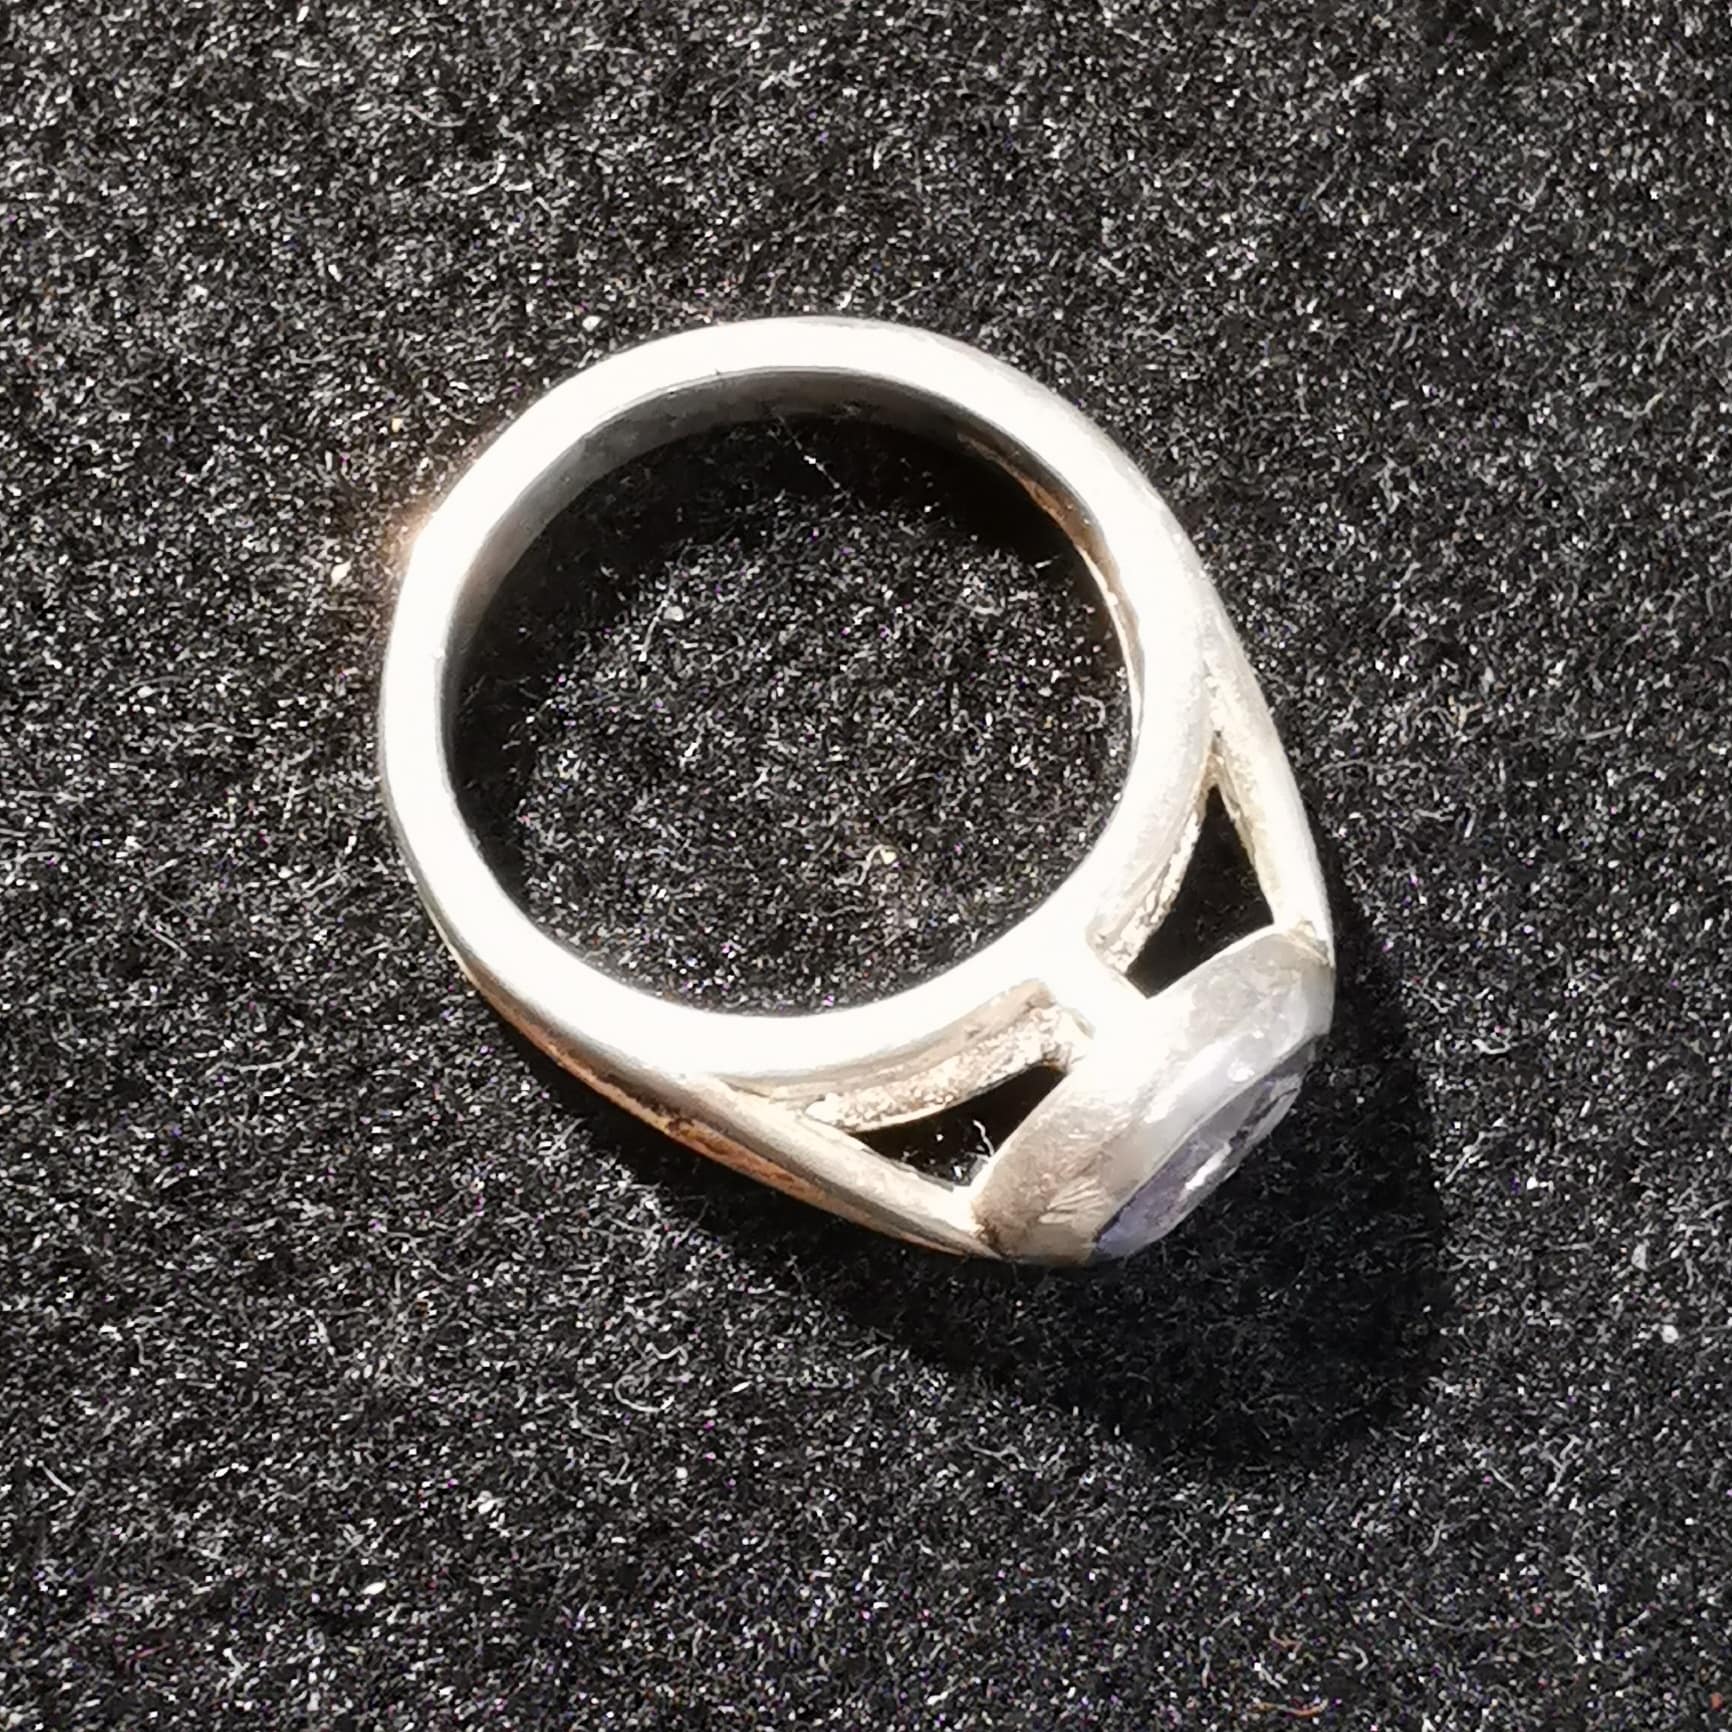 Amethyst Sterlingsilber Vintage Design Ring, kleine Grösse 49, Kronenchakra Edelstein Fingerring, zur Ruhe kommen